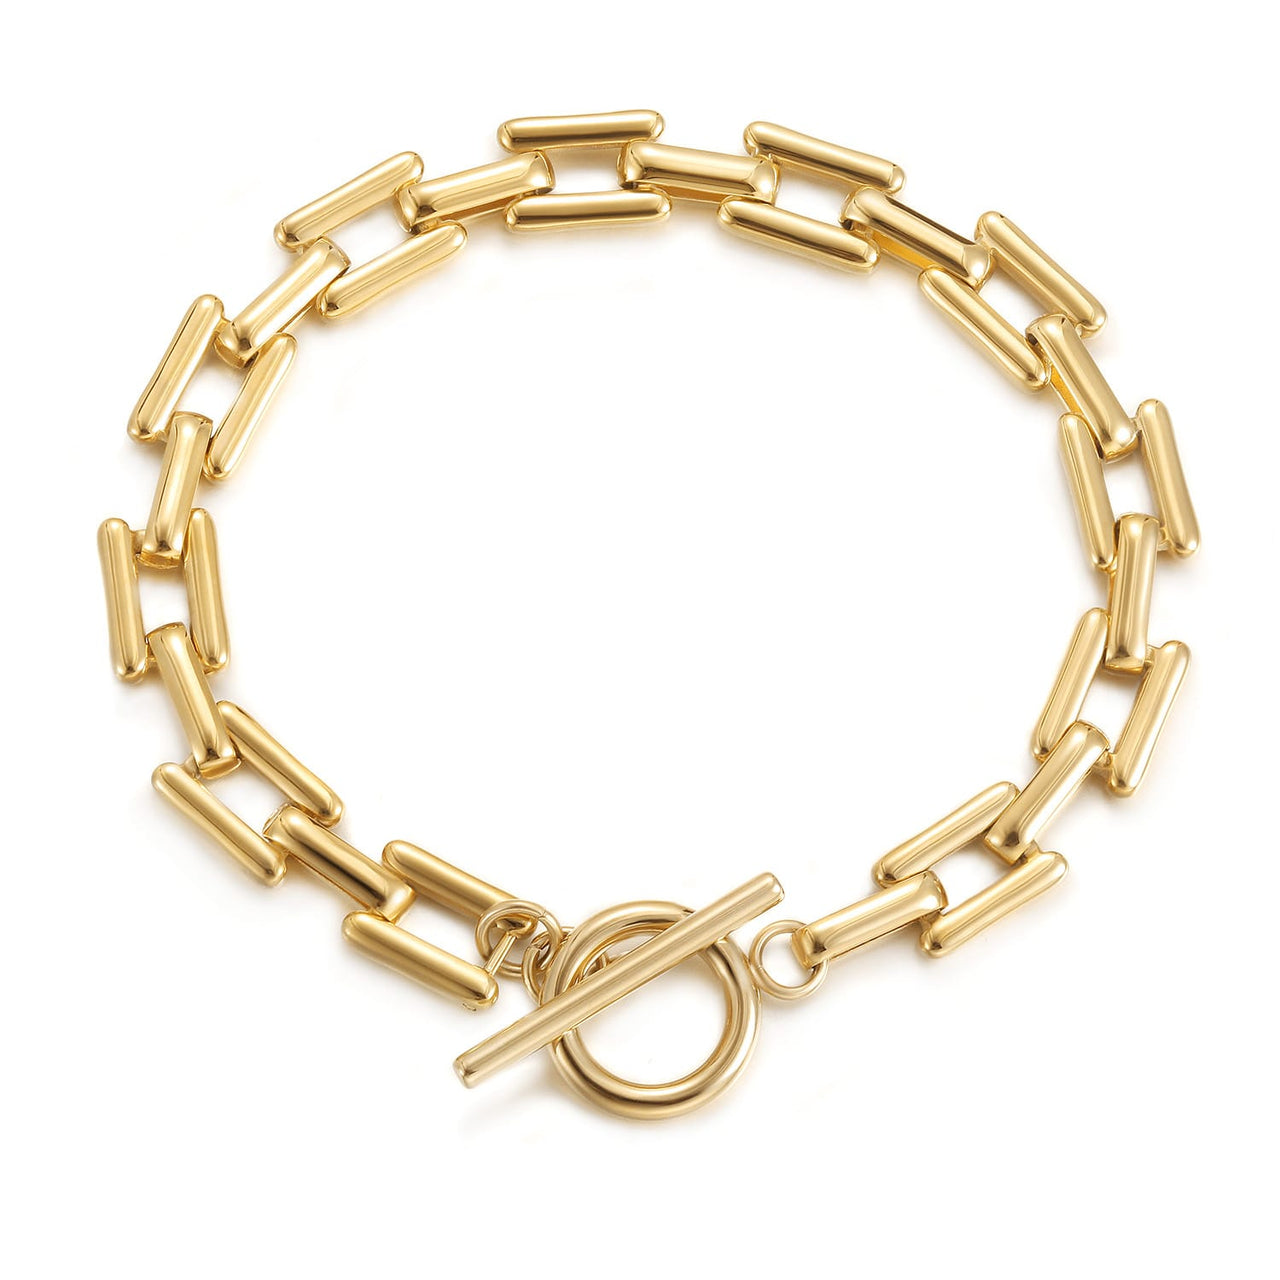 The Spring Gold Chain Bracelet